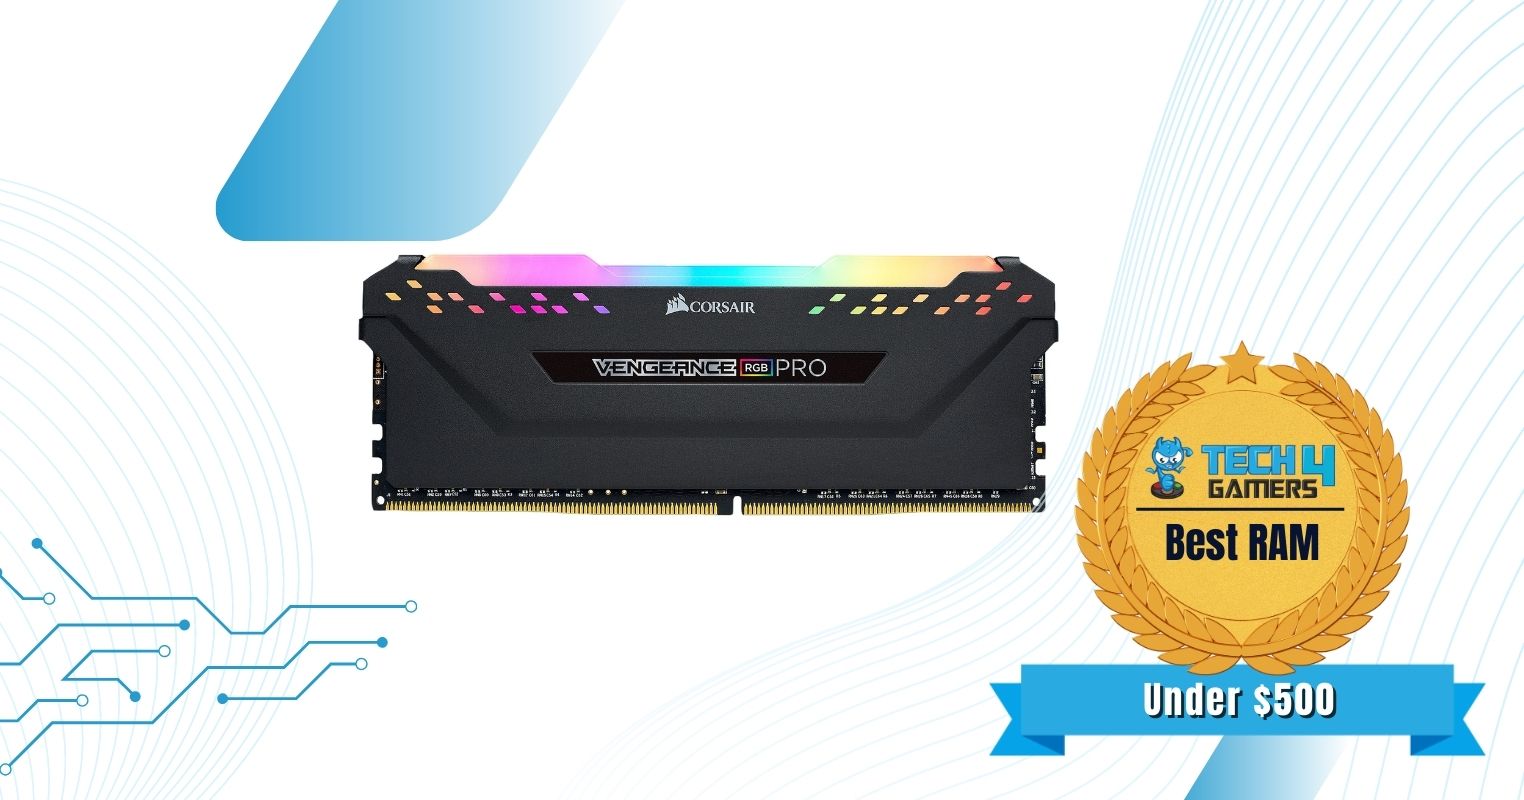 Corsair Vengeance RGB PRO 16GB 3200MHz CAS16 RAM For Best Gaming PC Under $500